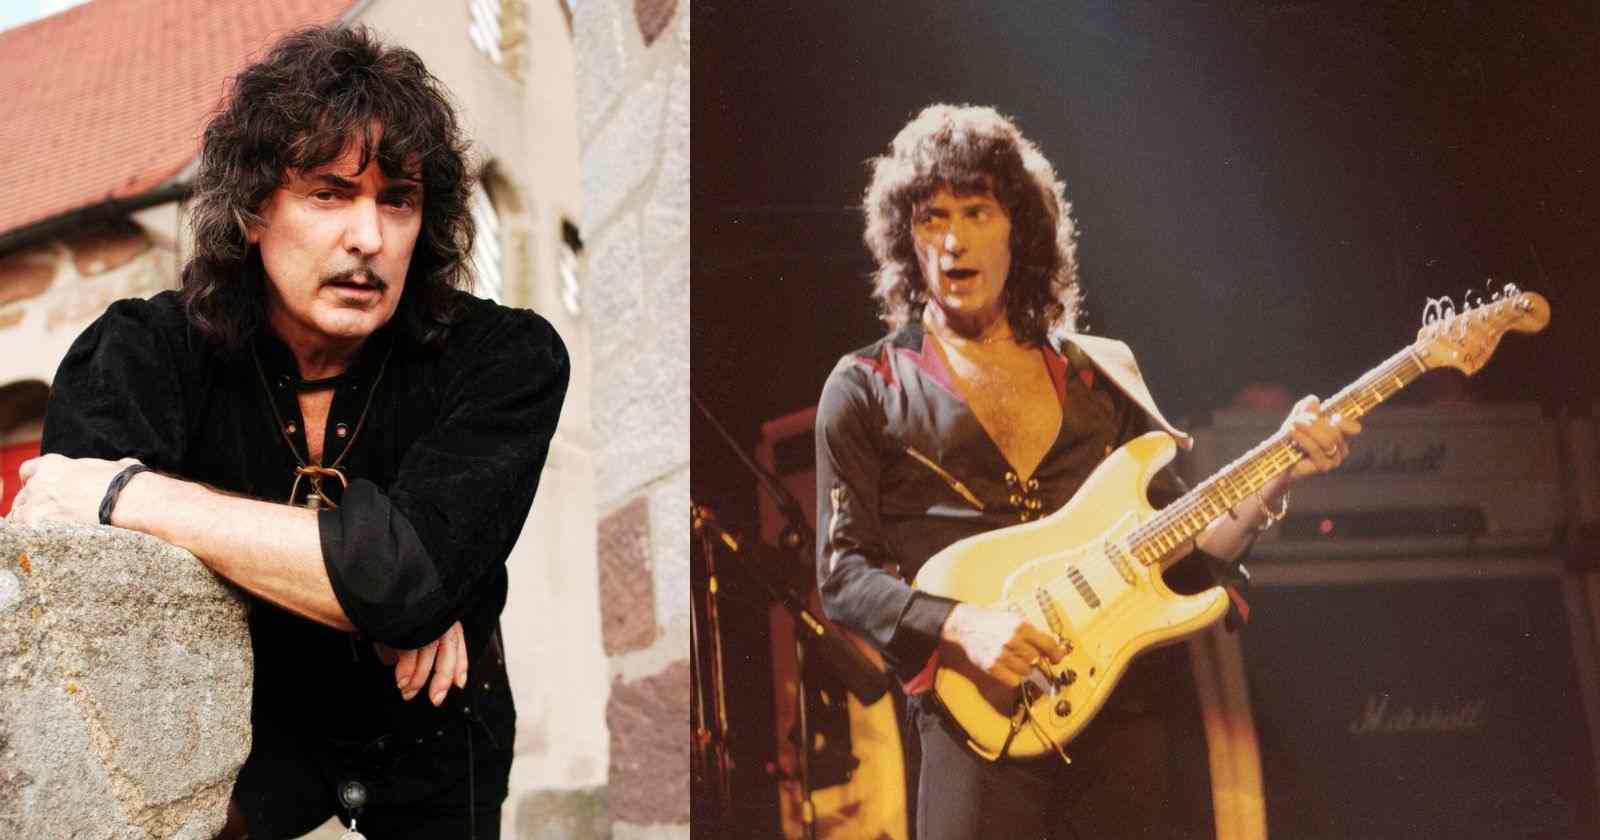 Ritchie Blackmore